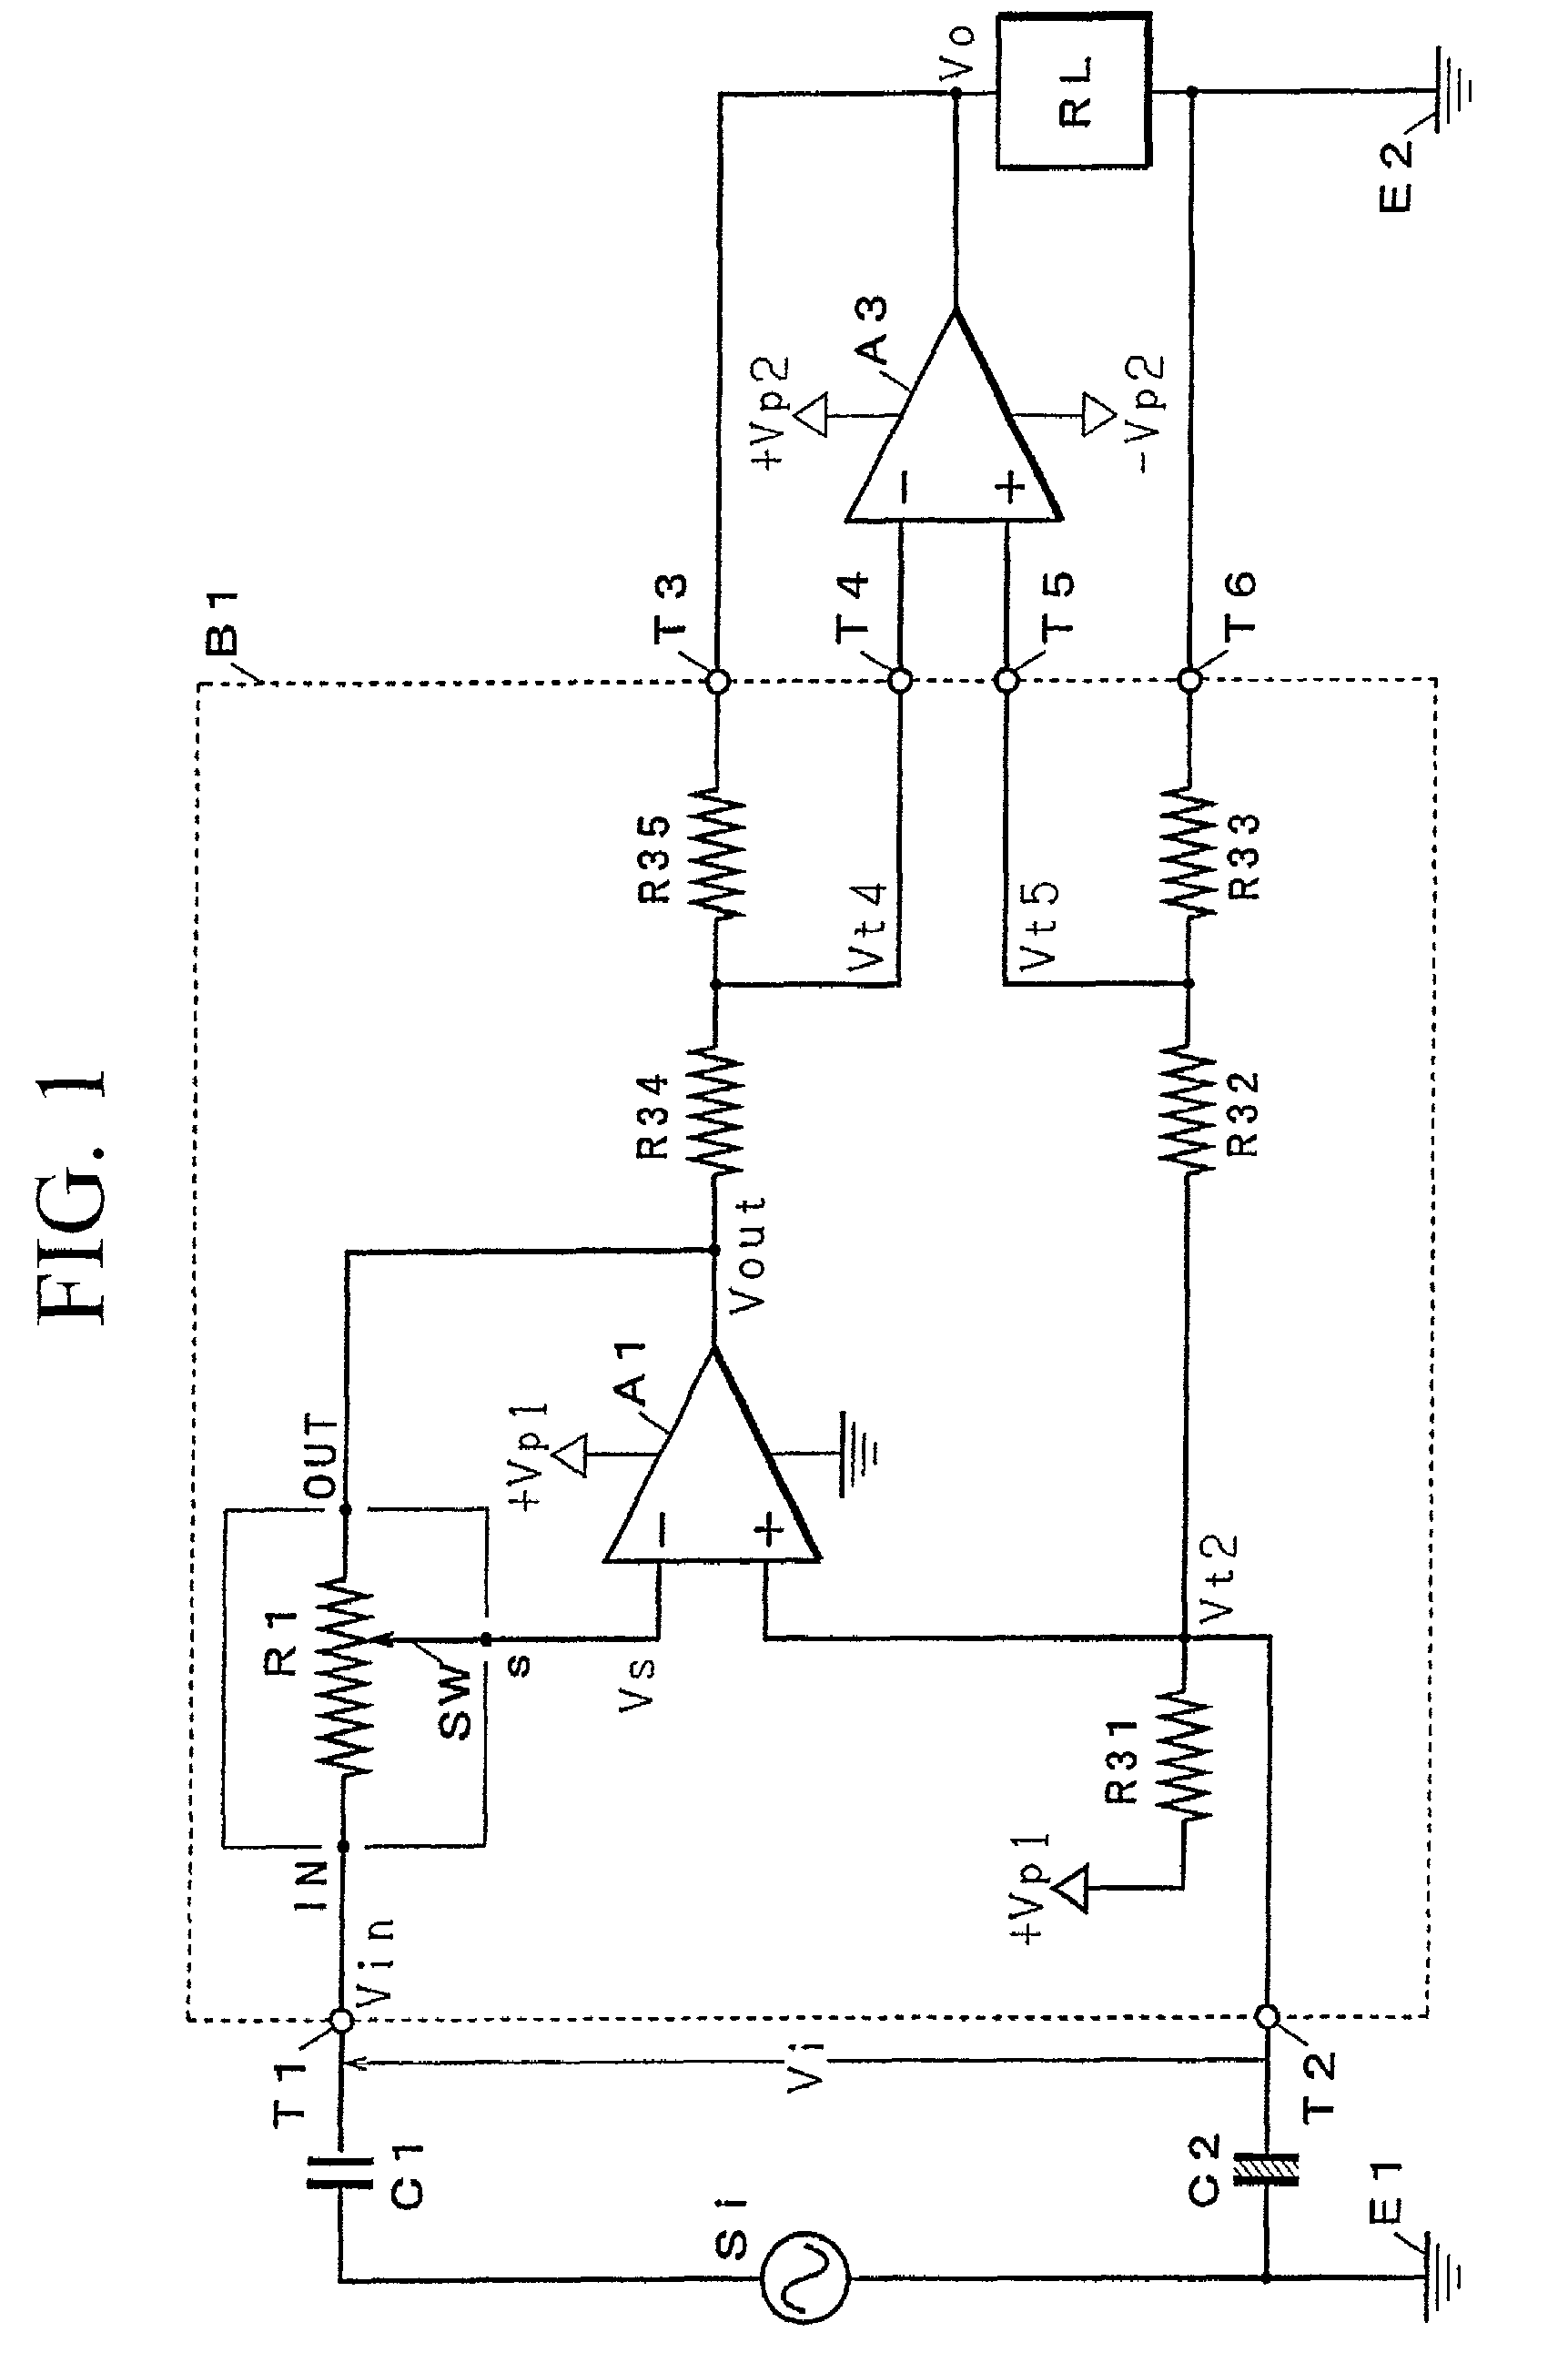 Volume circuit using resistive ladder circuits